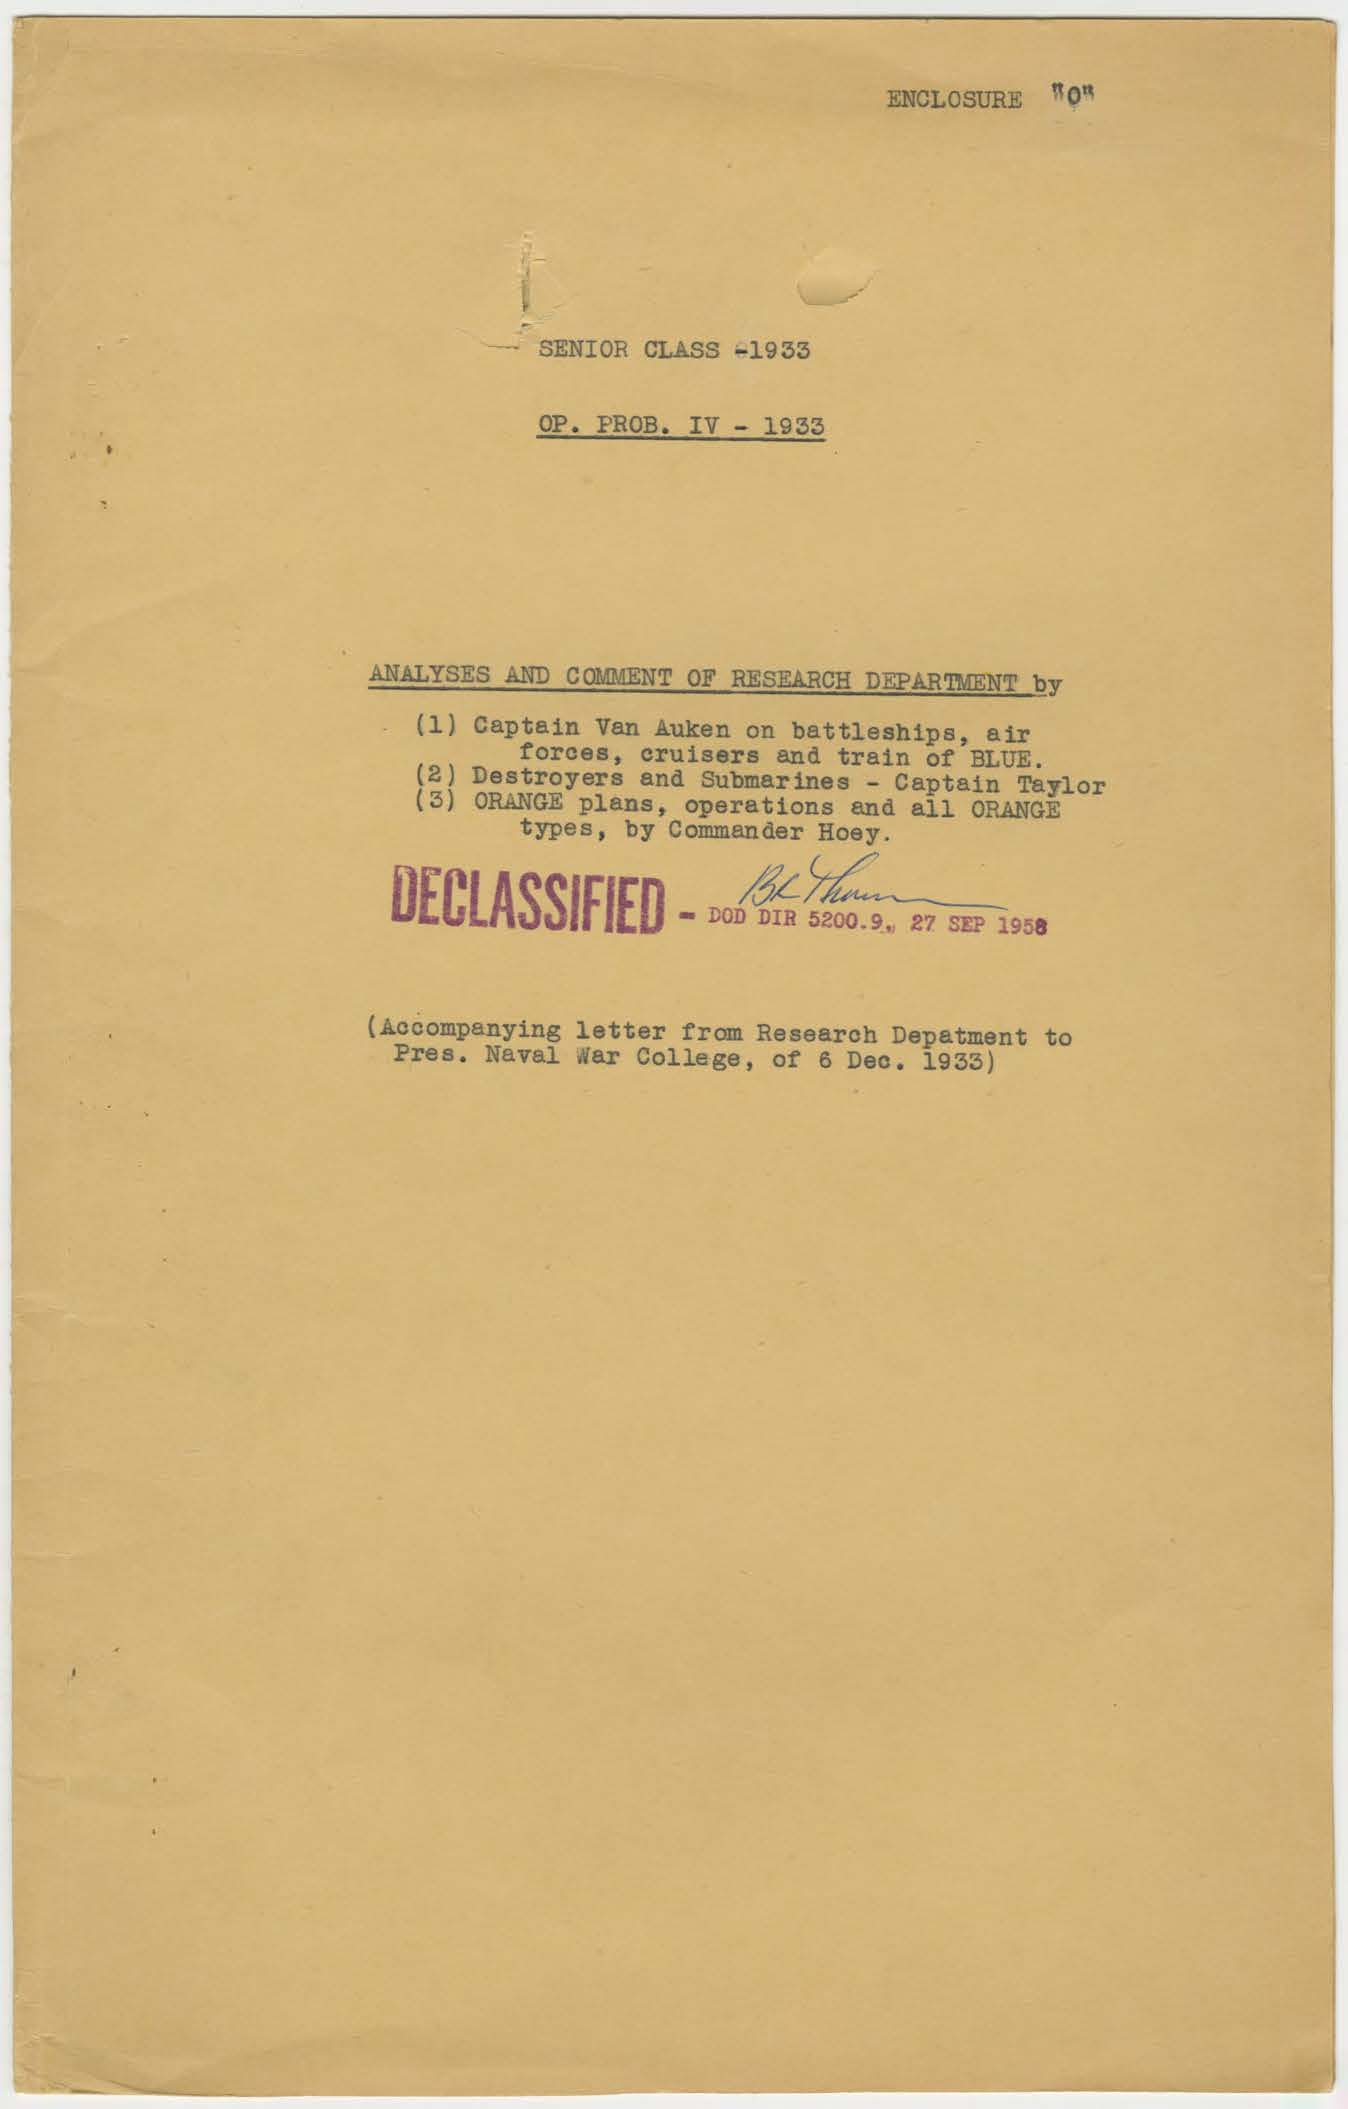 Operation Problem IV - 1933: Comment by Captain Conant Taylor